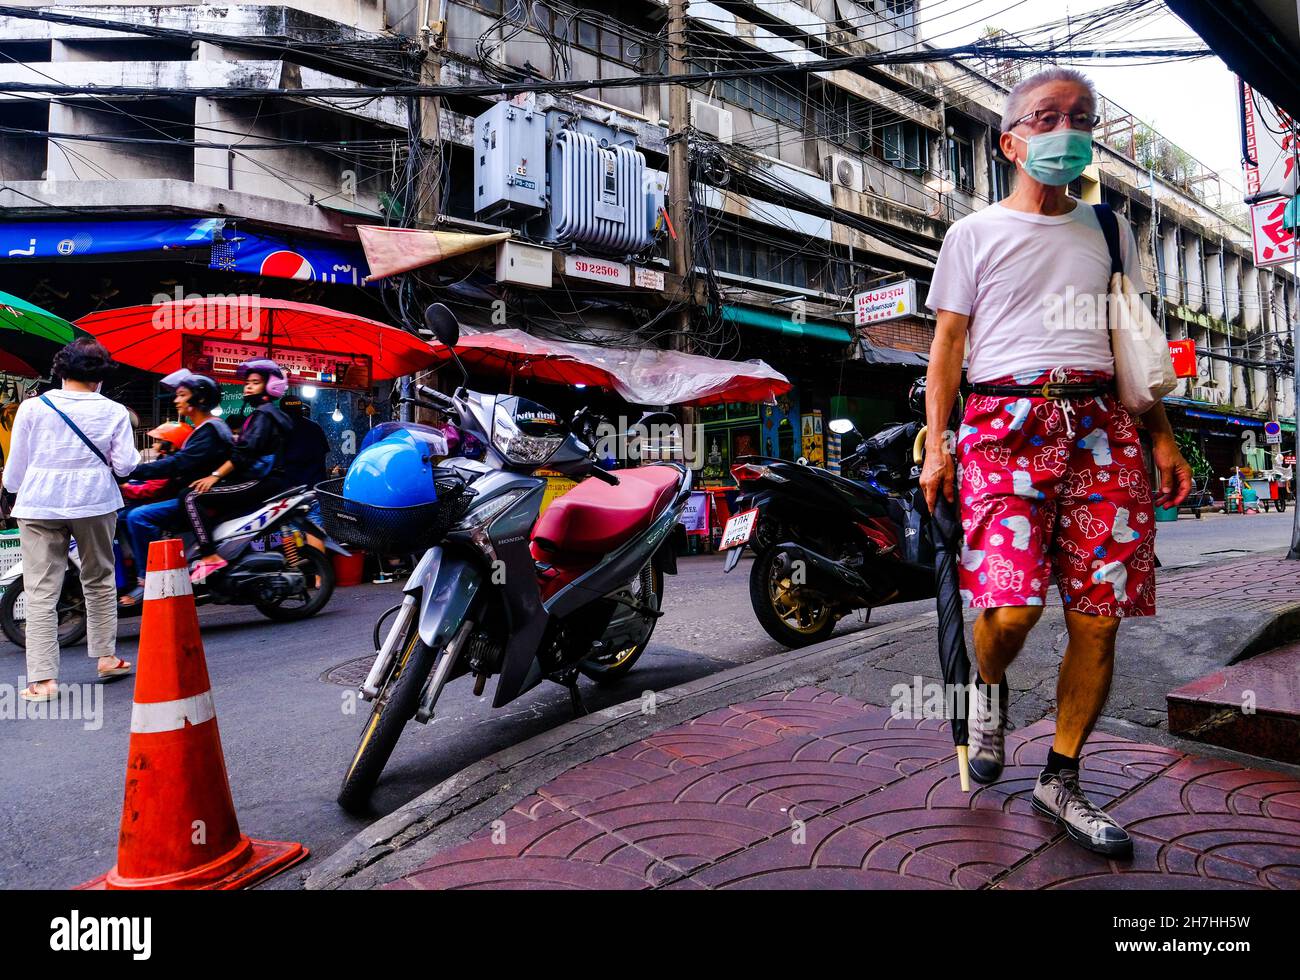 An elderly man wearing colorful shorts walks along the pavement in Chinatown, Bangkok Thailand Stock Photo